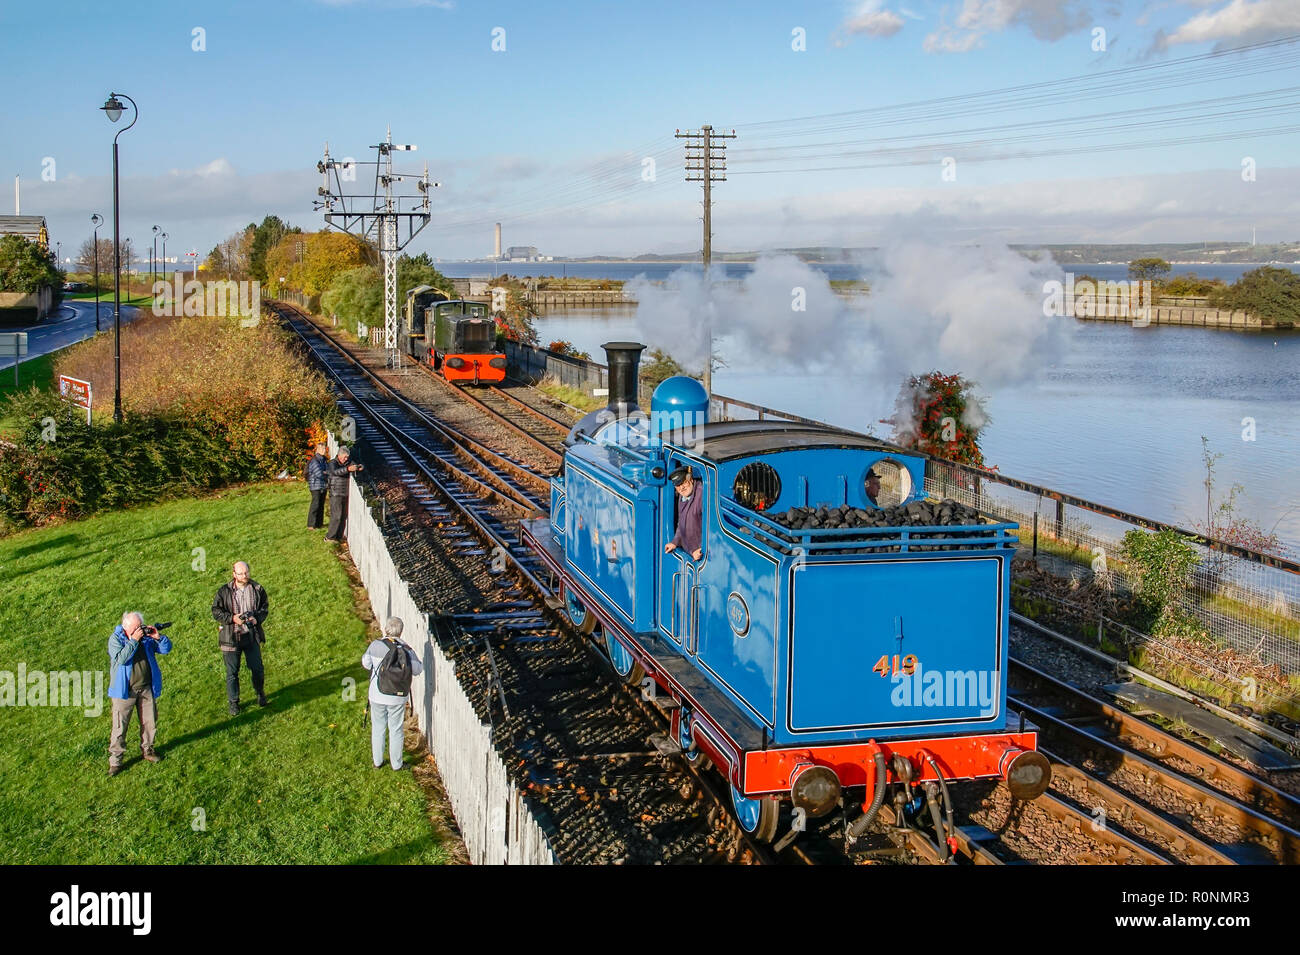 Caledonian Railway locomotive 419 à Bo'ness & Kinneil Gala à vapeur 2018 Bo'ness Falkirk Scotland UK Banque D'Images